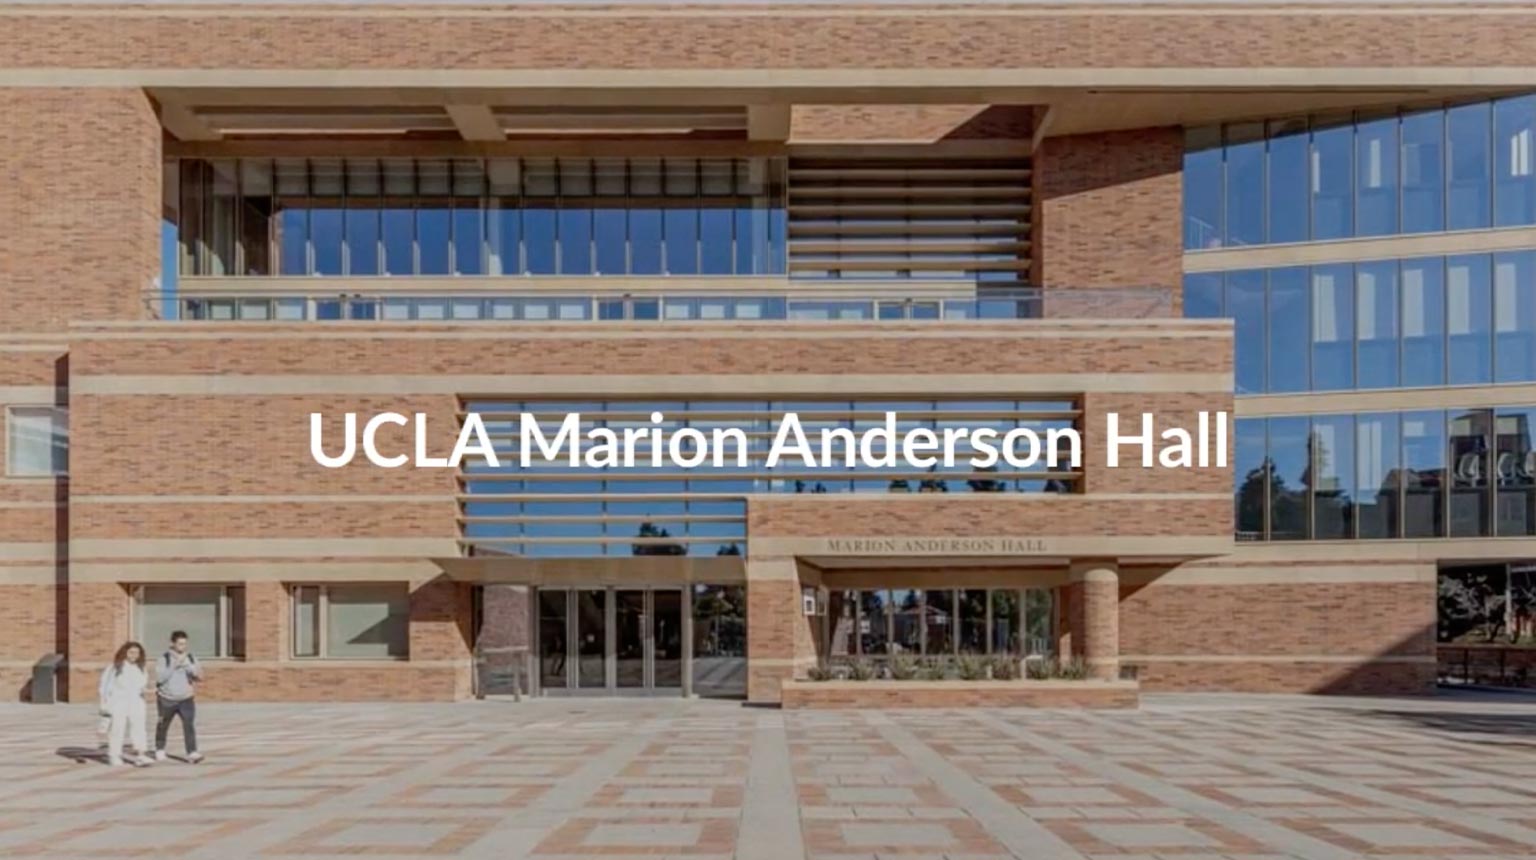 UCLA Marion Anderson Hall